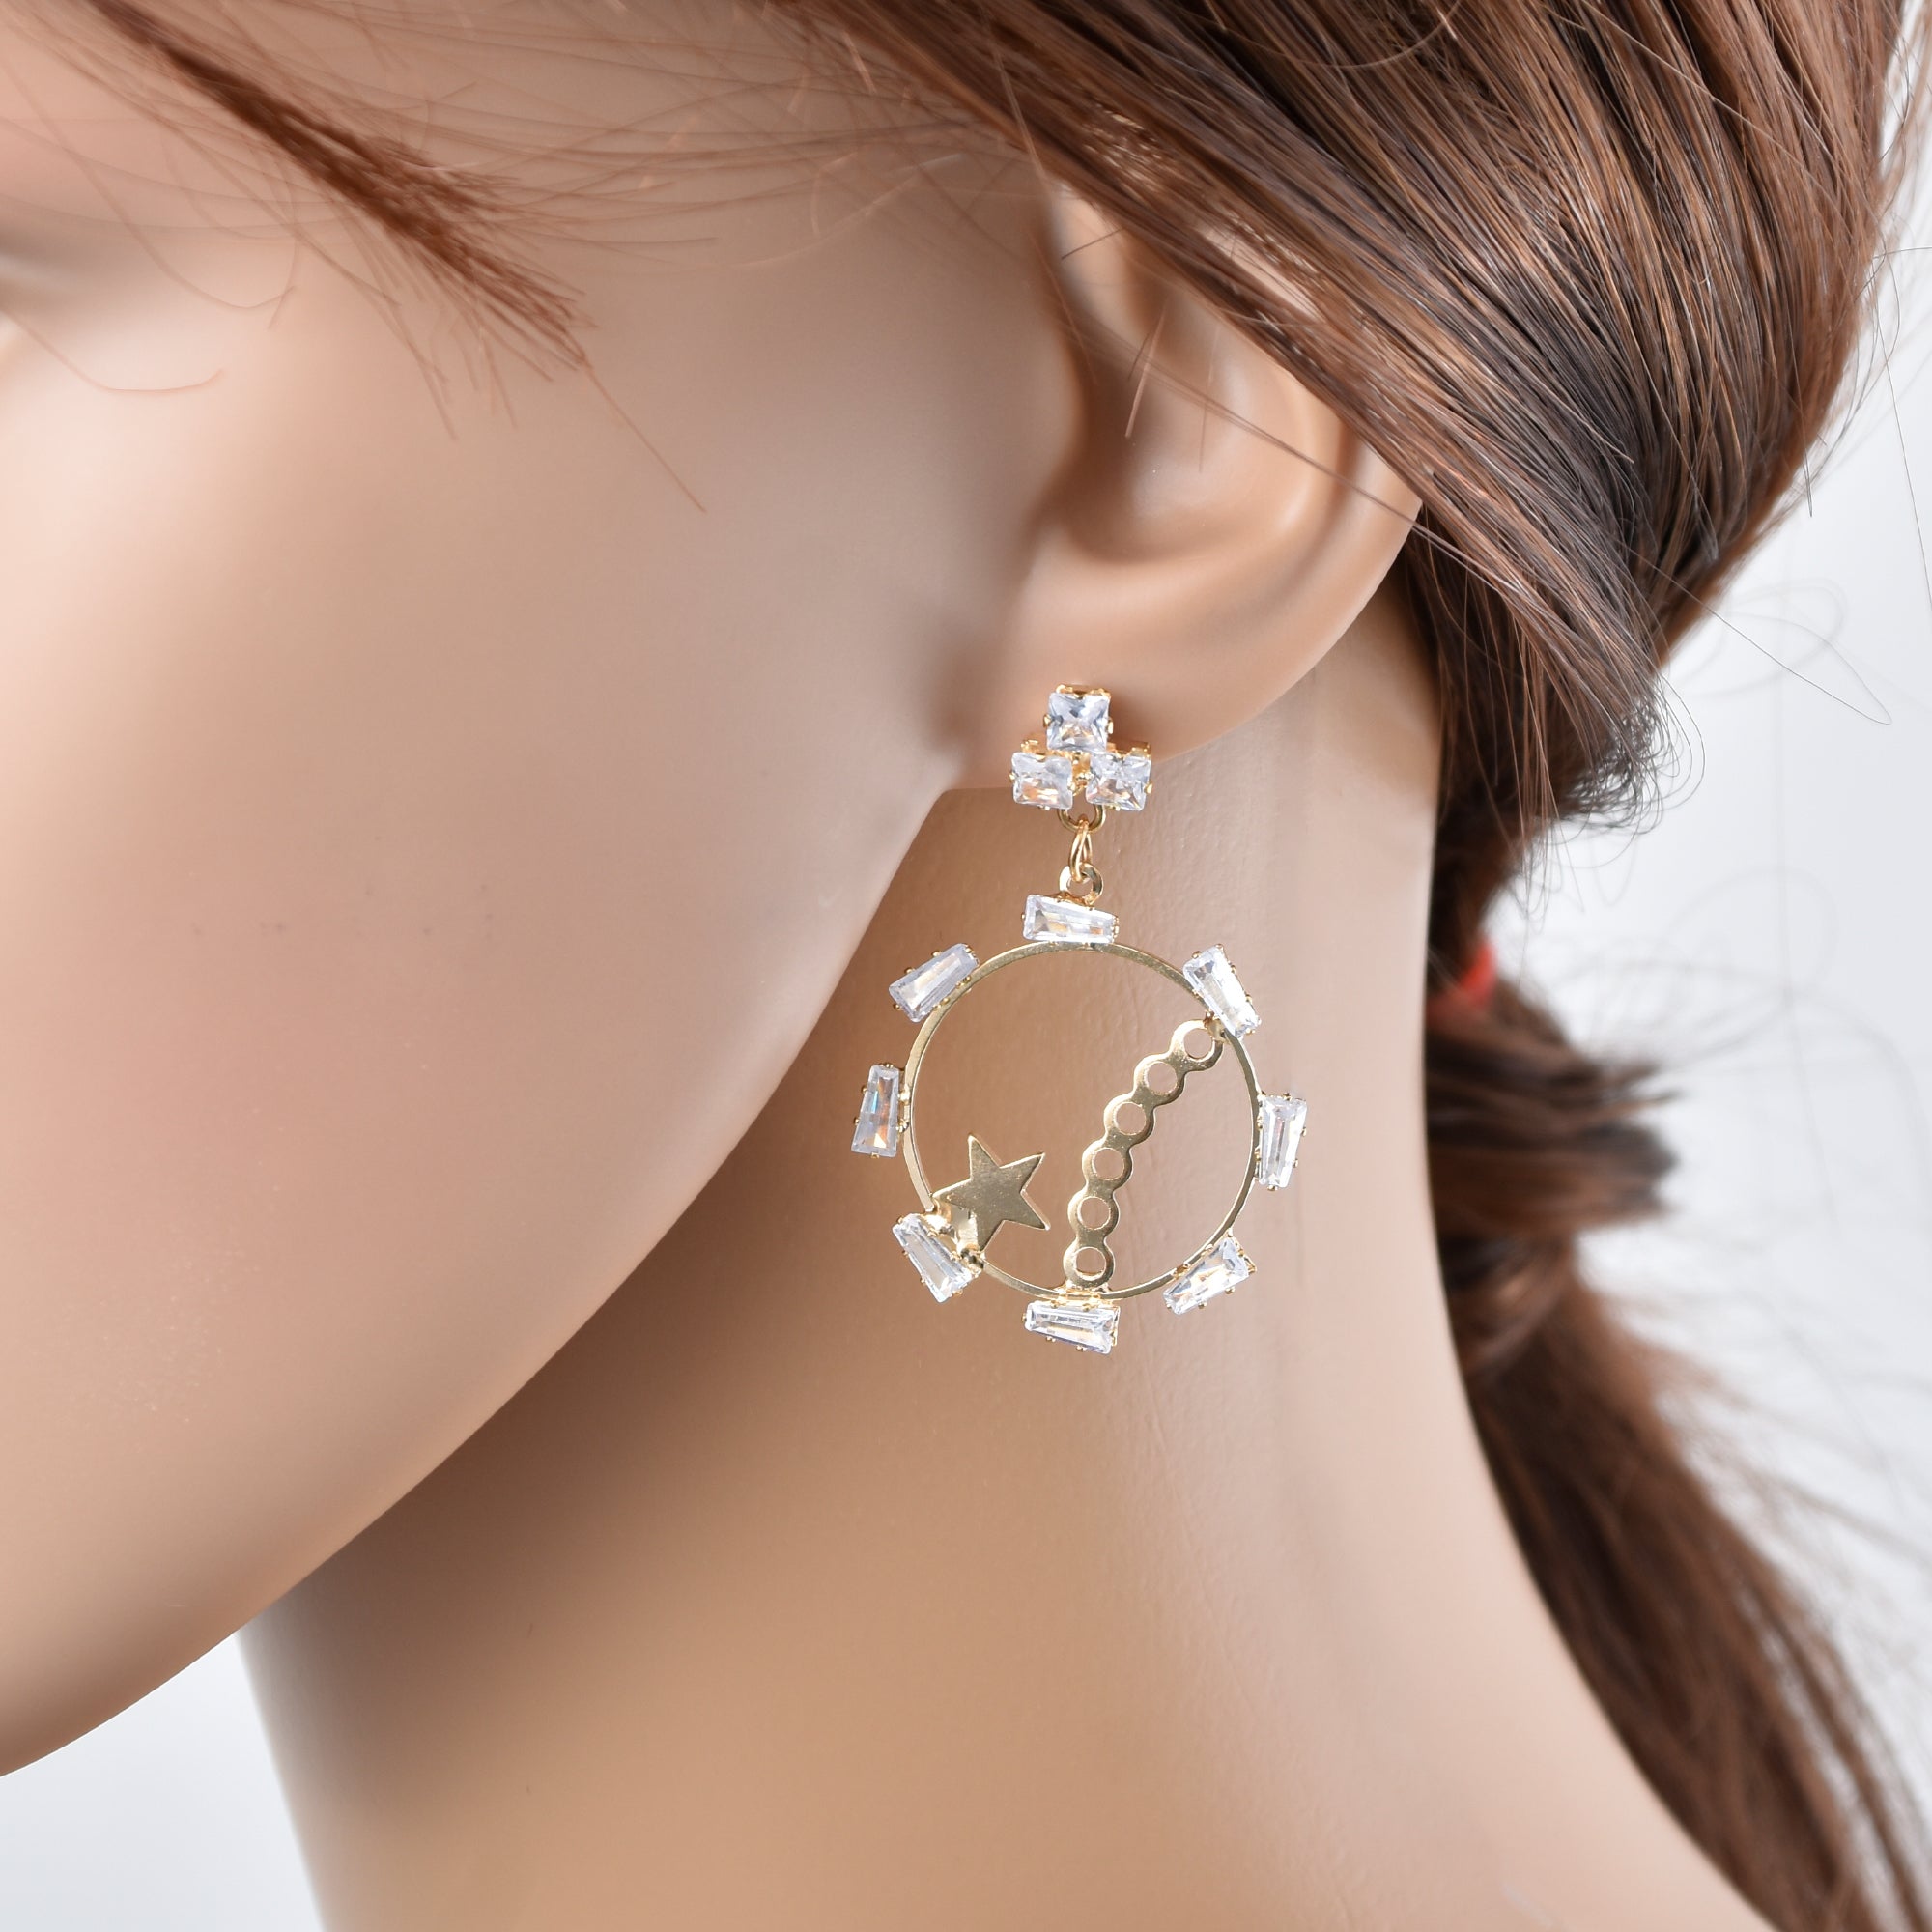 Circular Dangle Earrings With Star Design